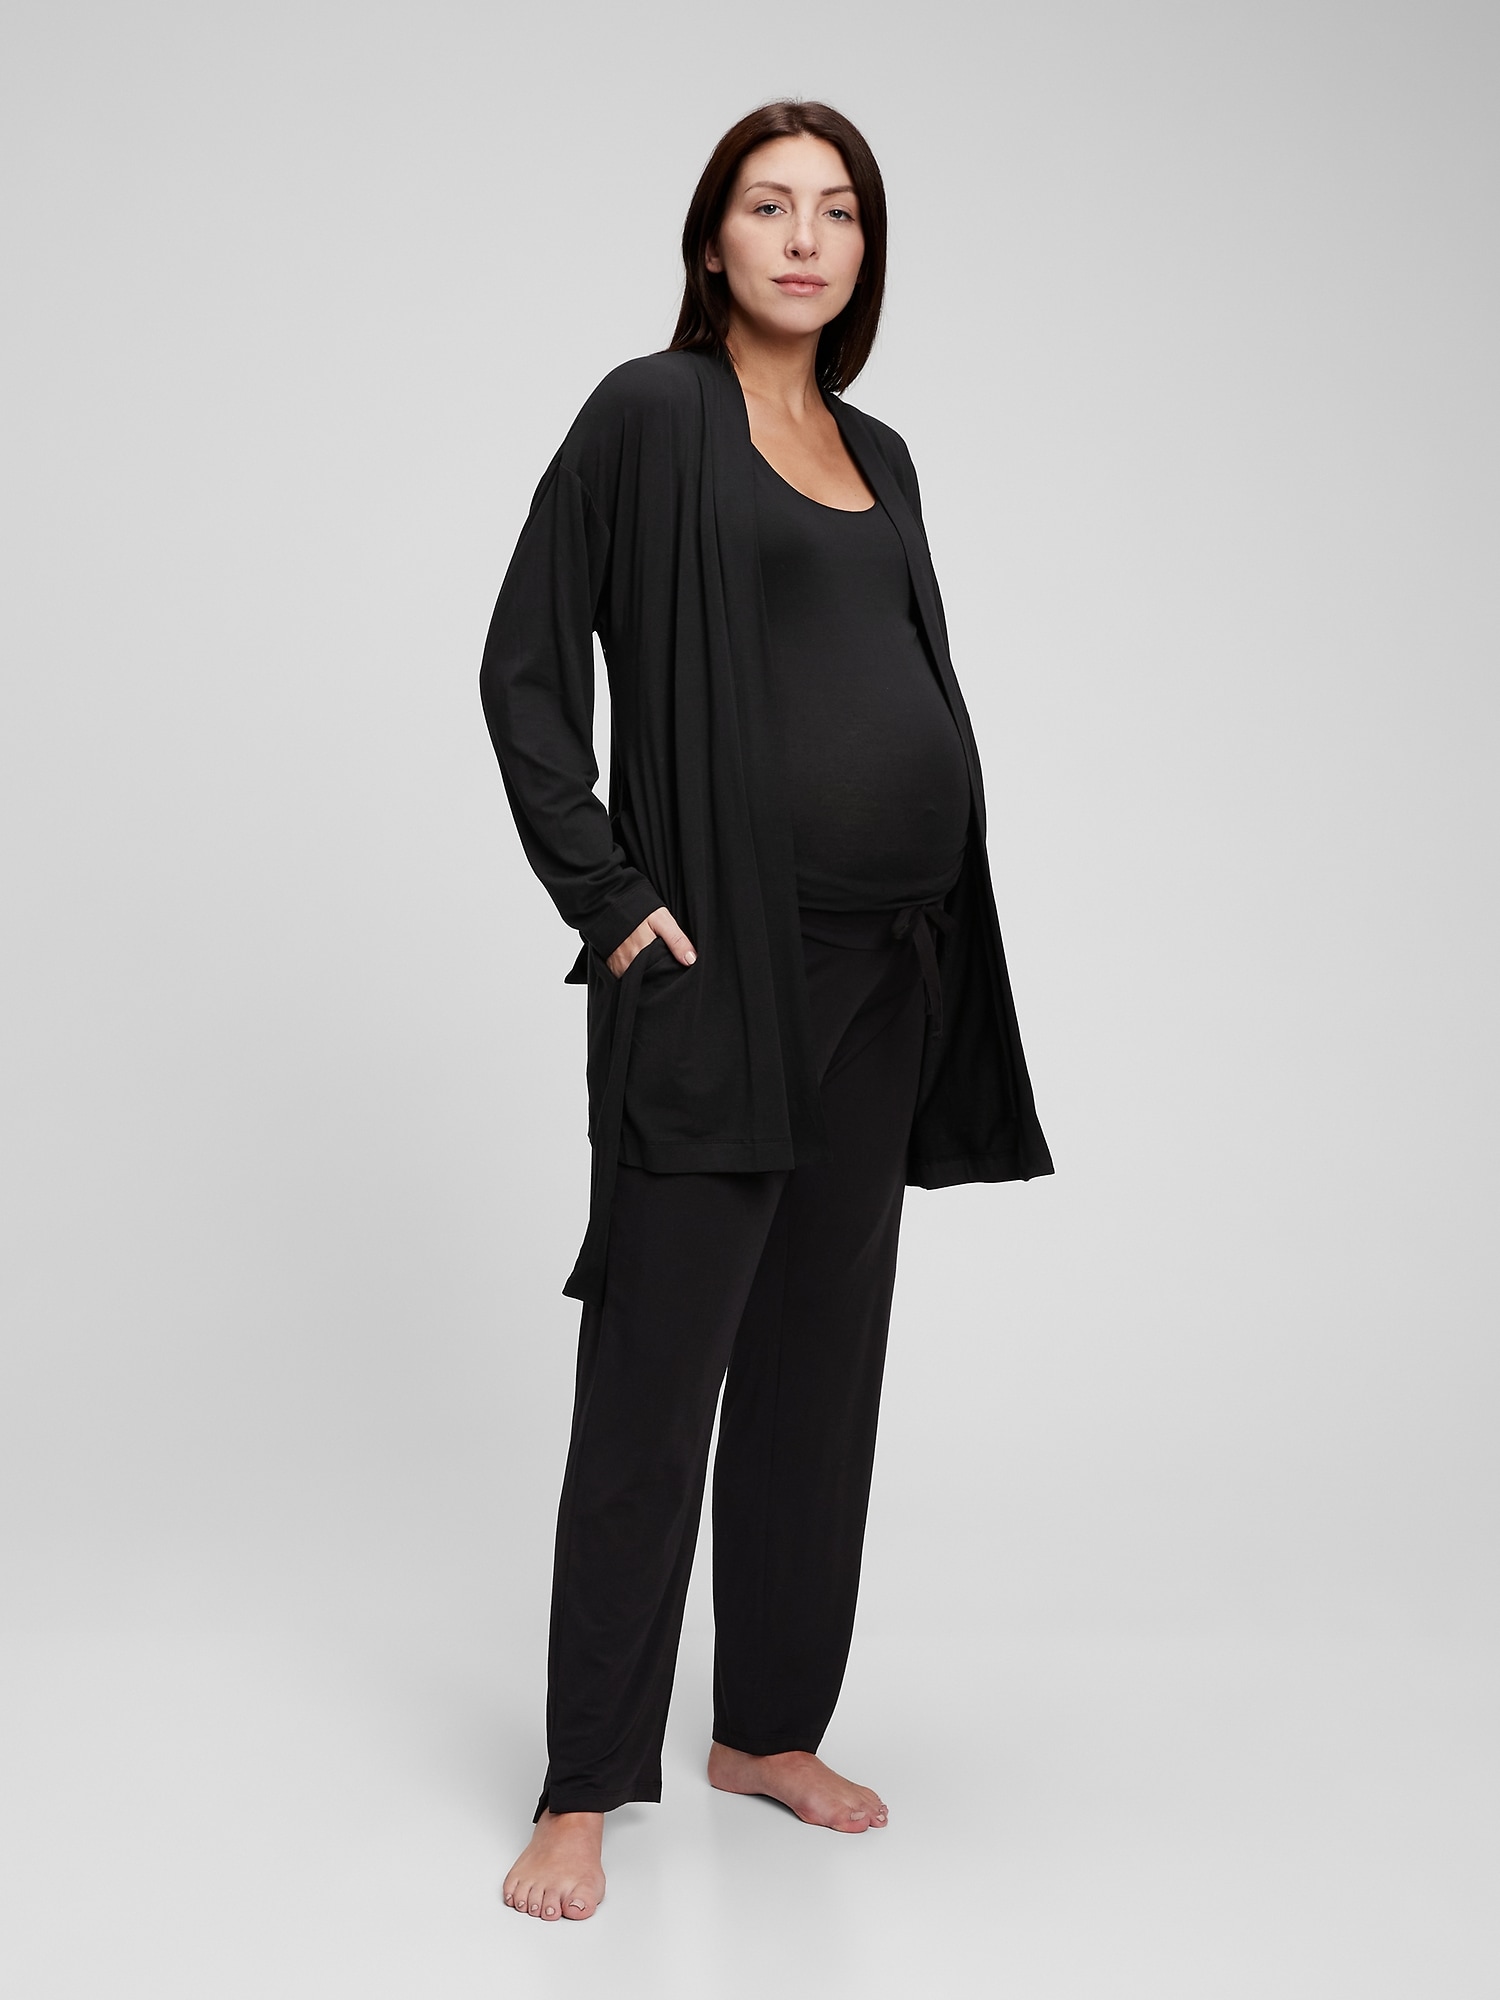 A DOMANI, Pajamas for Maternity + Postpartum